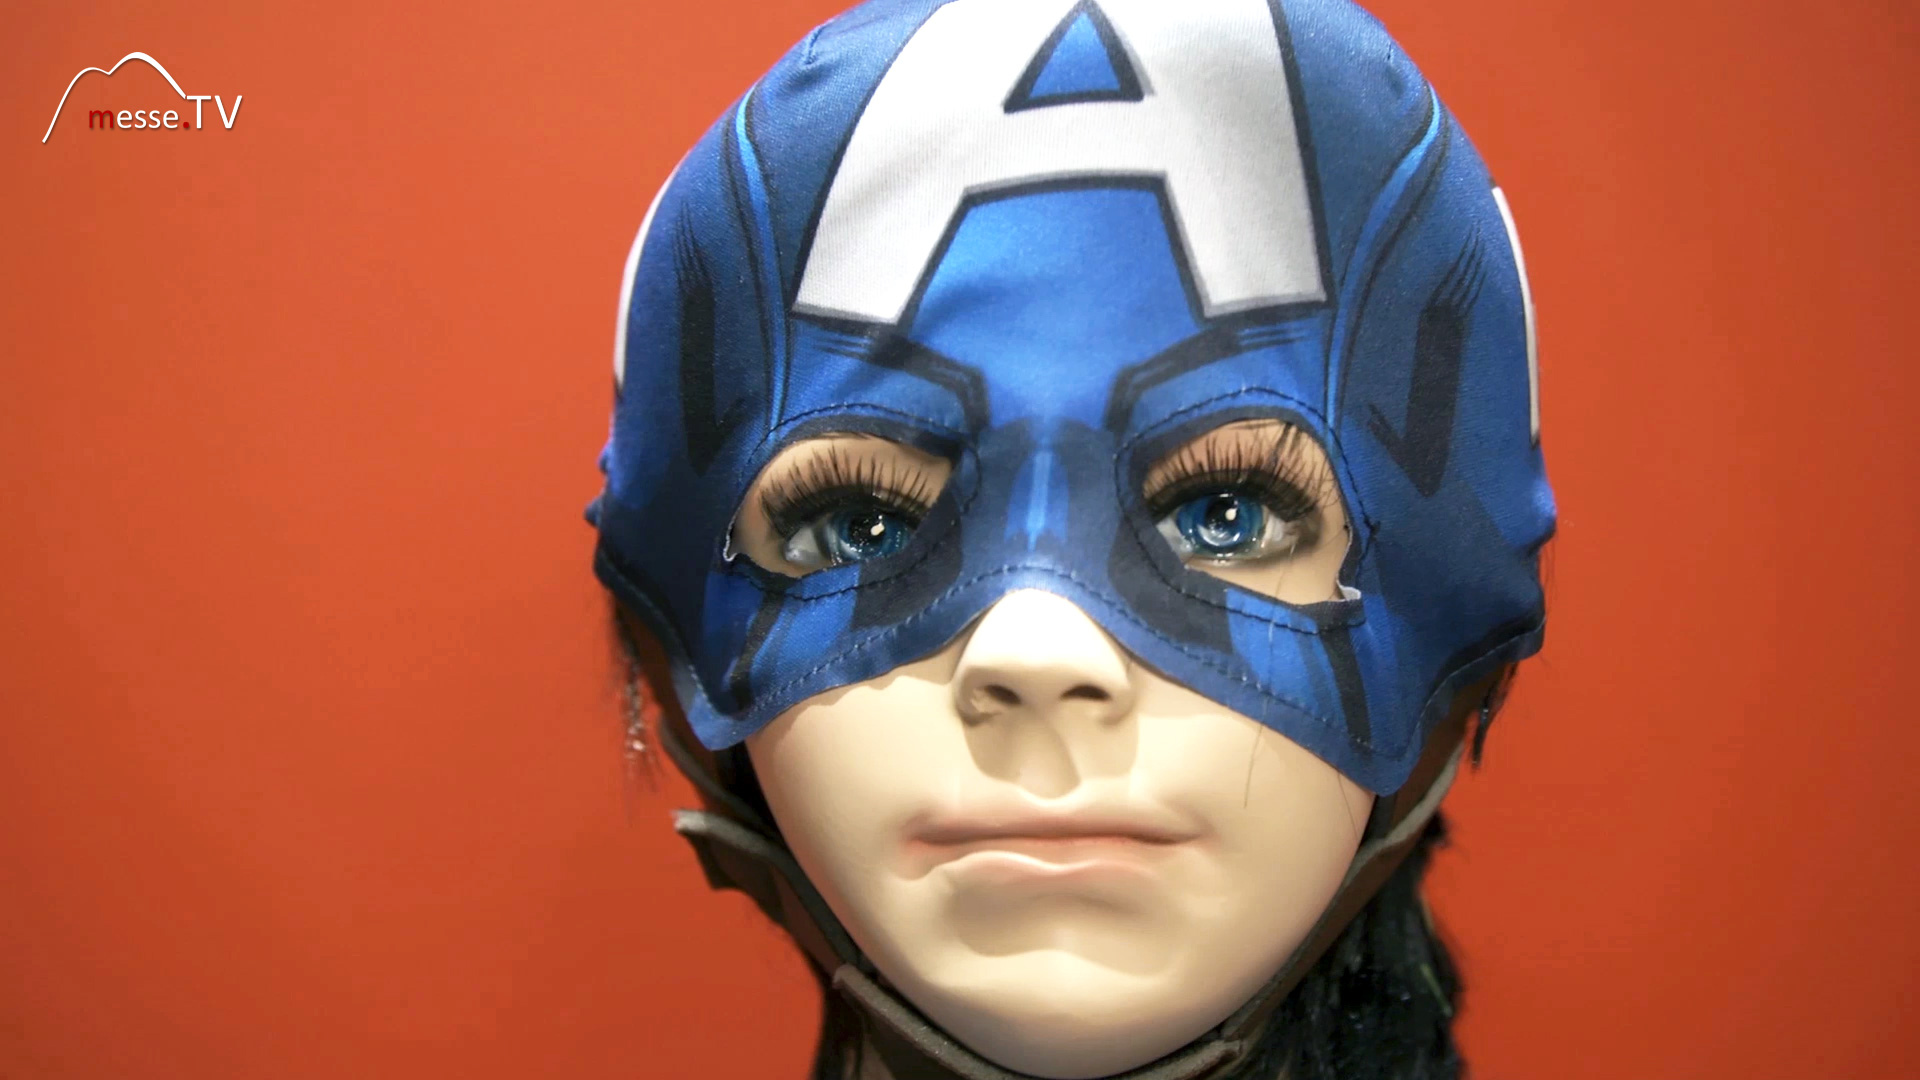 Avengers Captain America Rubies costume